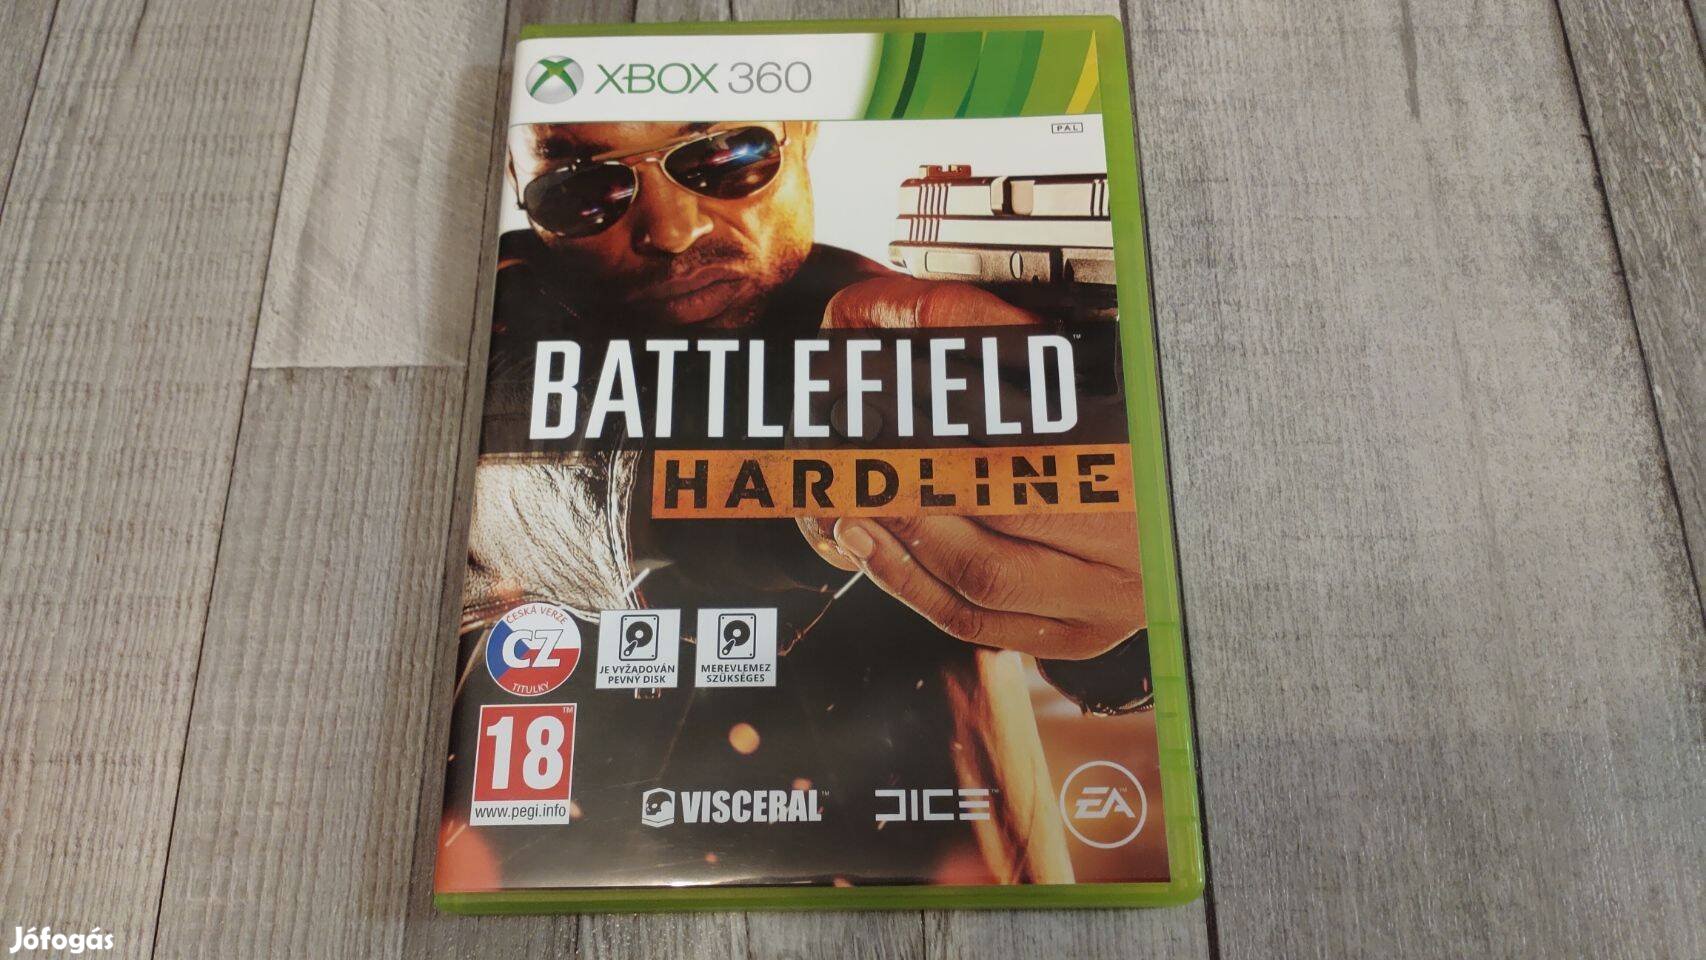 Top Xbox 360 : Battlefield Hardline